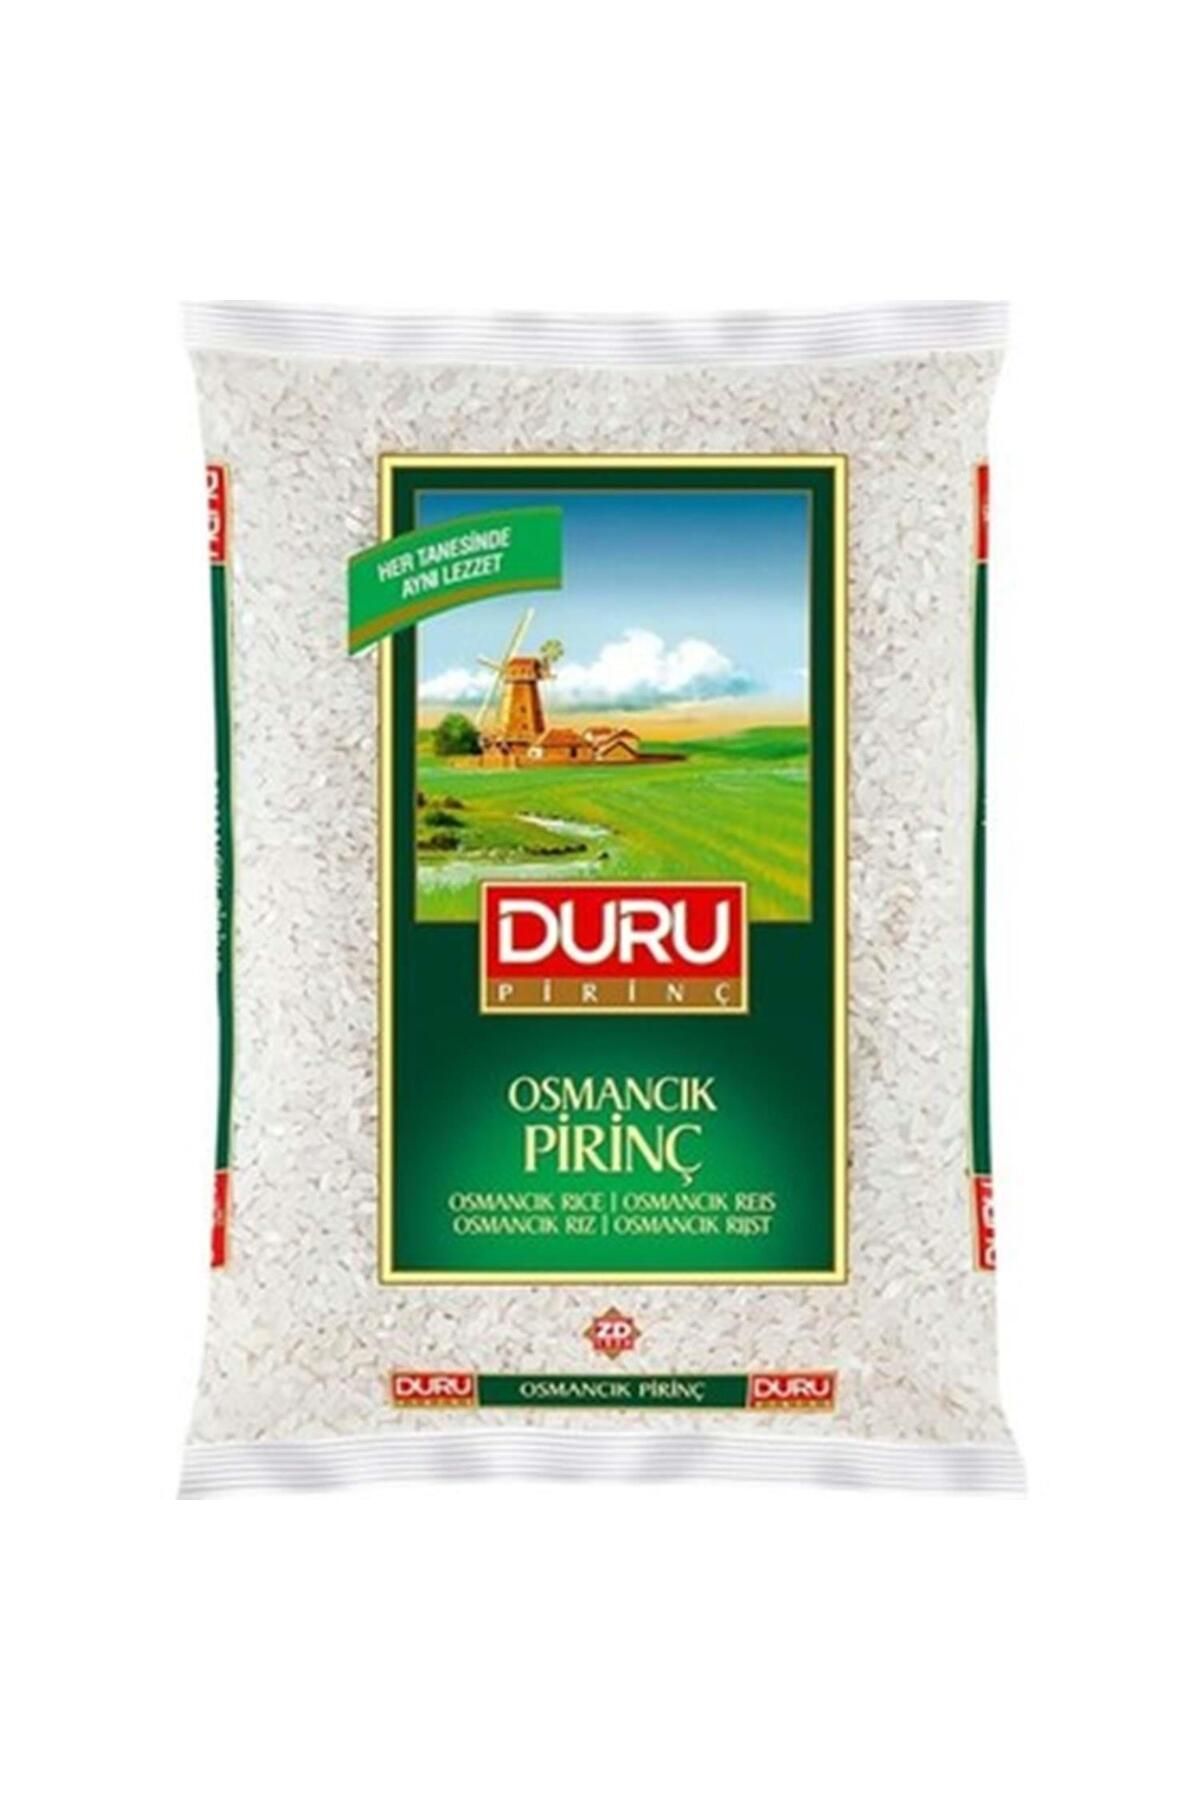 Duru Osmancık Pirinç 2000 Gr. (12'Lİ)